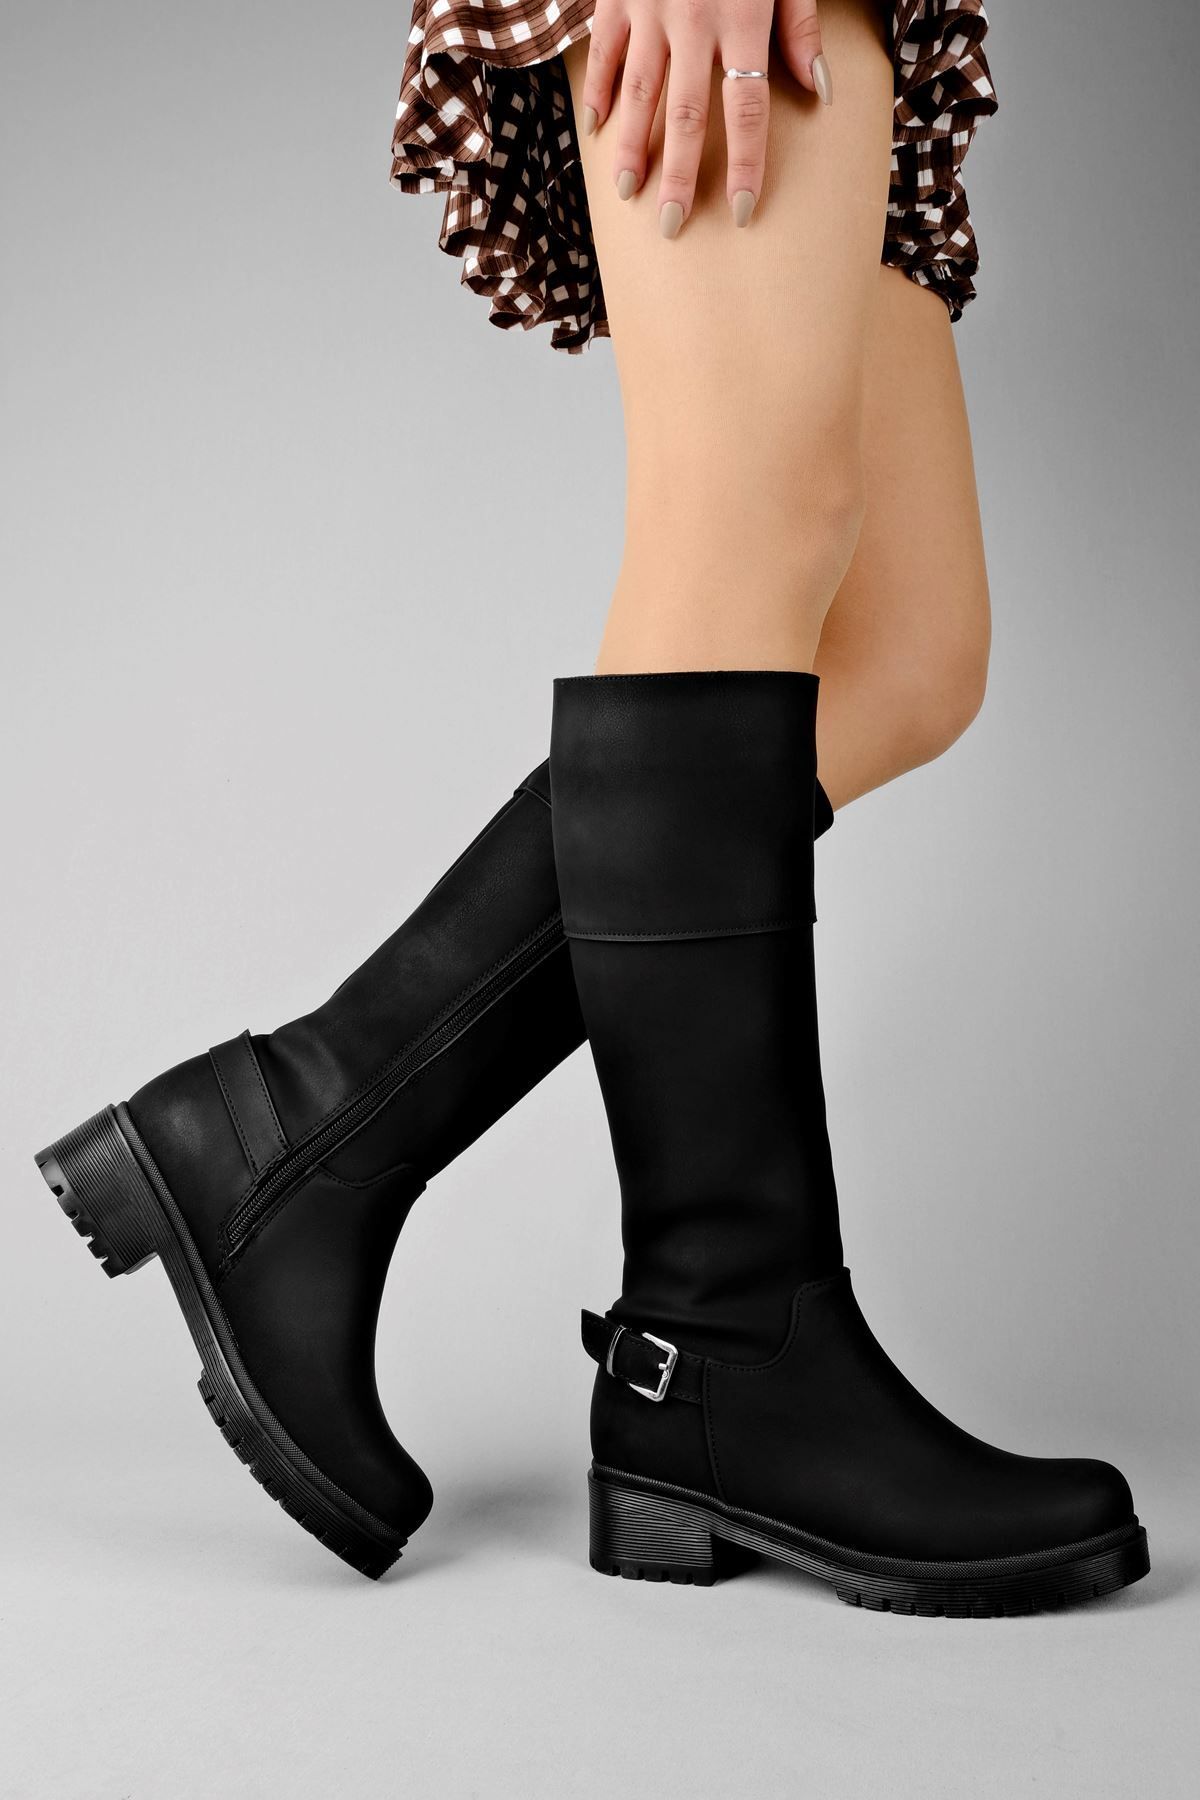 LAL SHOES & BAGS Breda Kadın Çizme Kenarı Tokalı-siyah